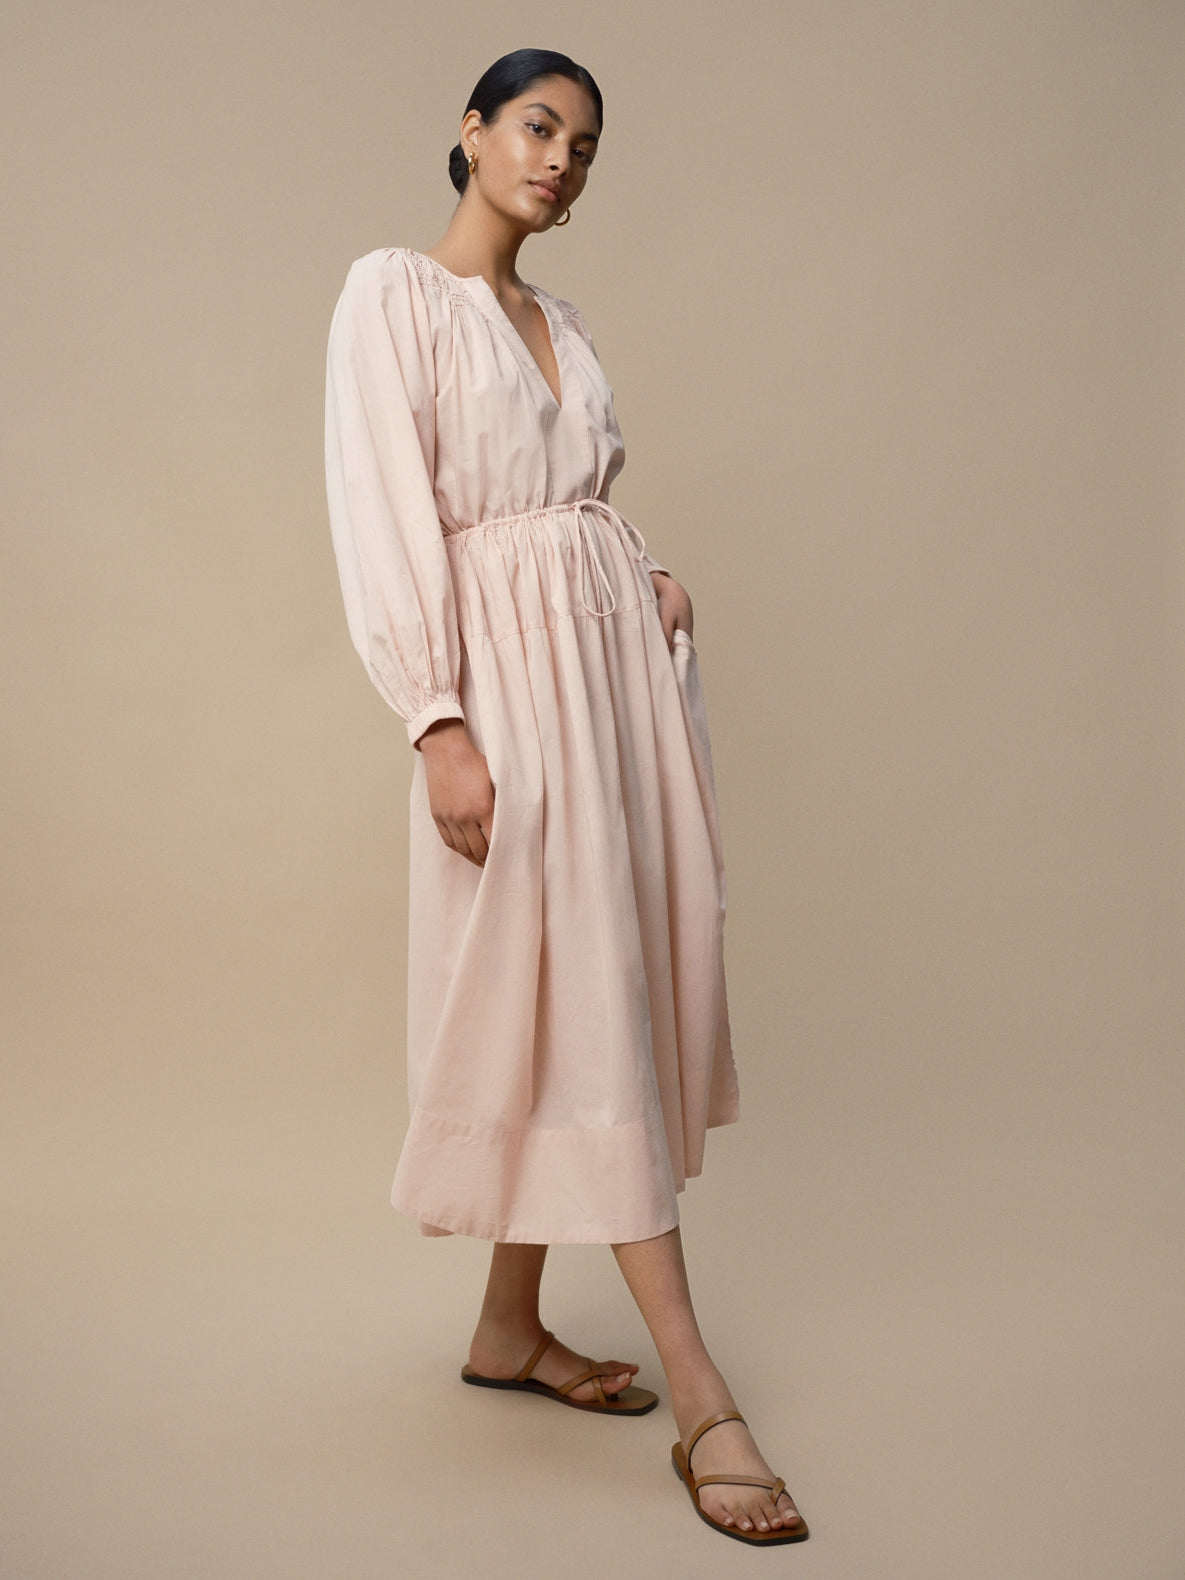 Victorine - Blush Cotton Dress - Mondo Corsini